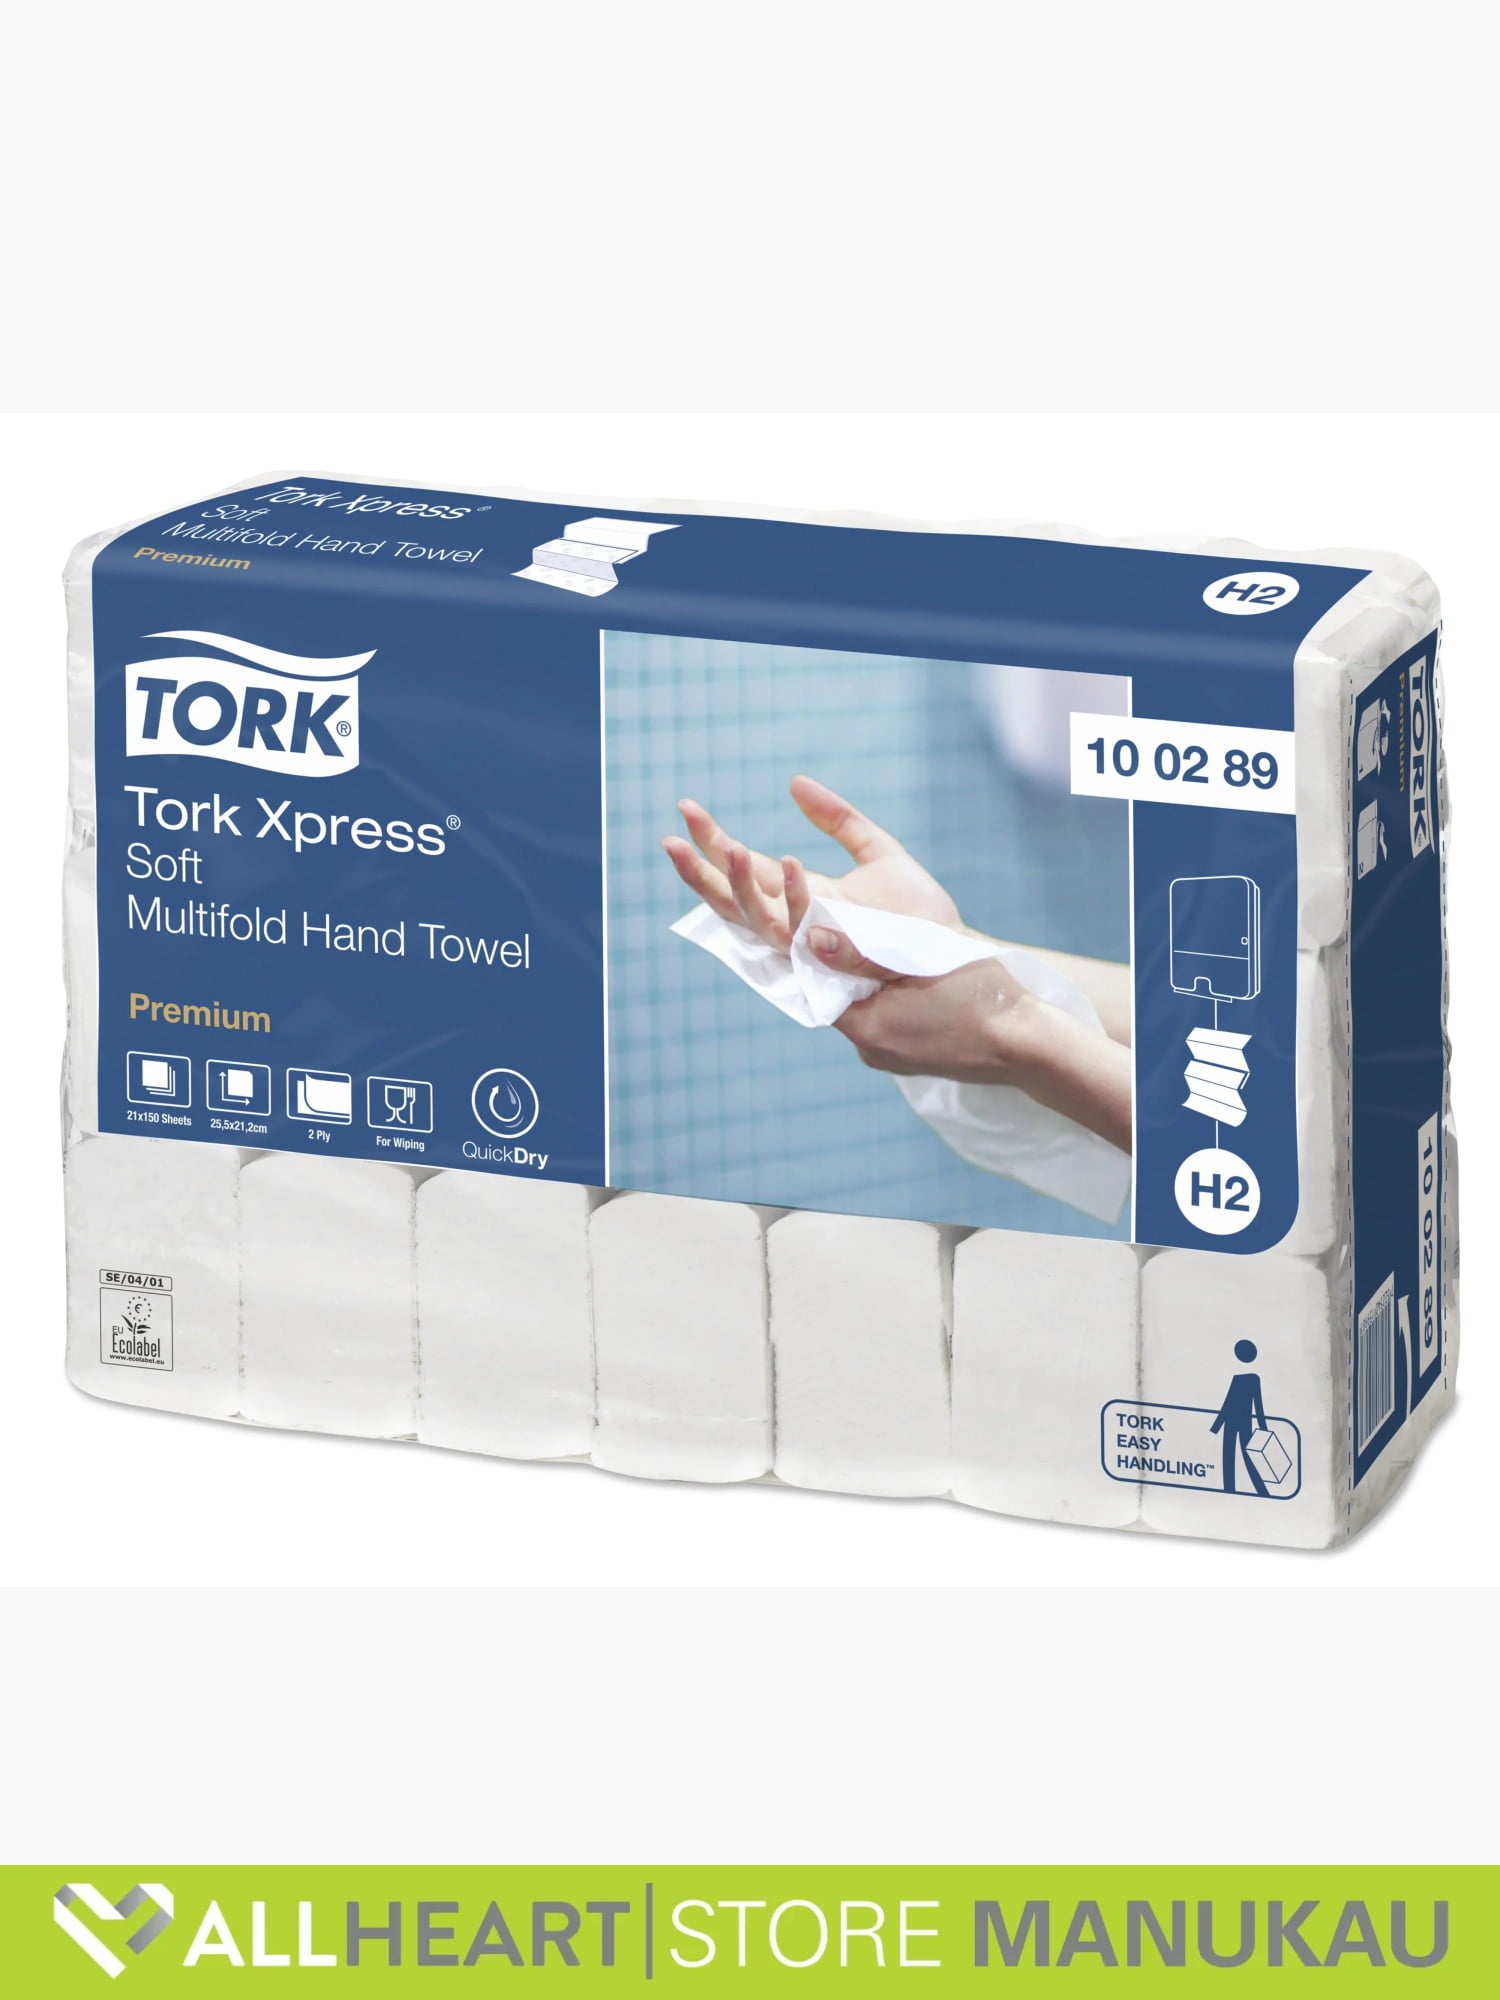 Tork Xpress - Soft Hand Towel - H2 10 02 89